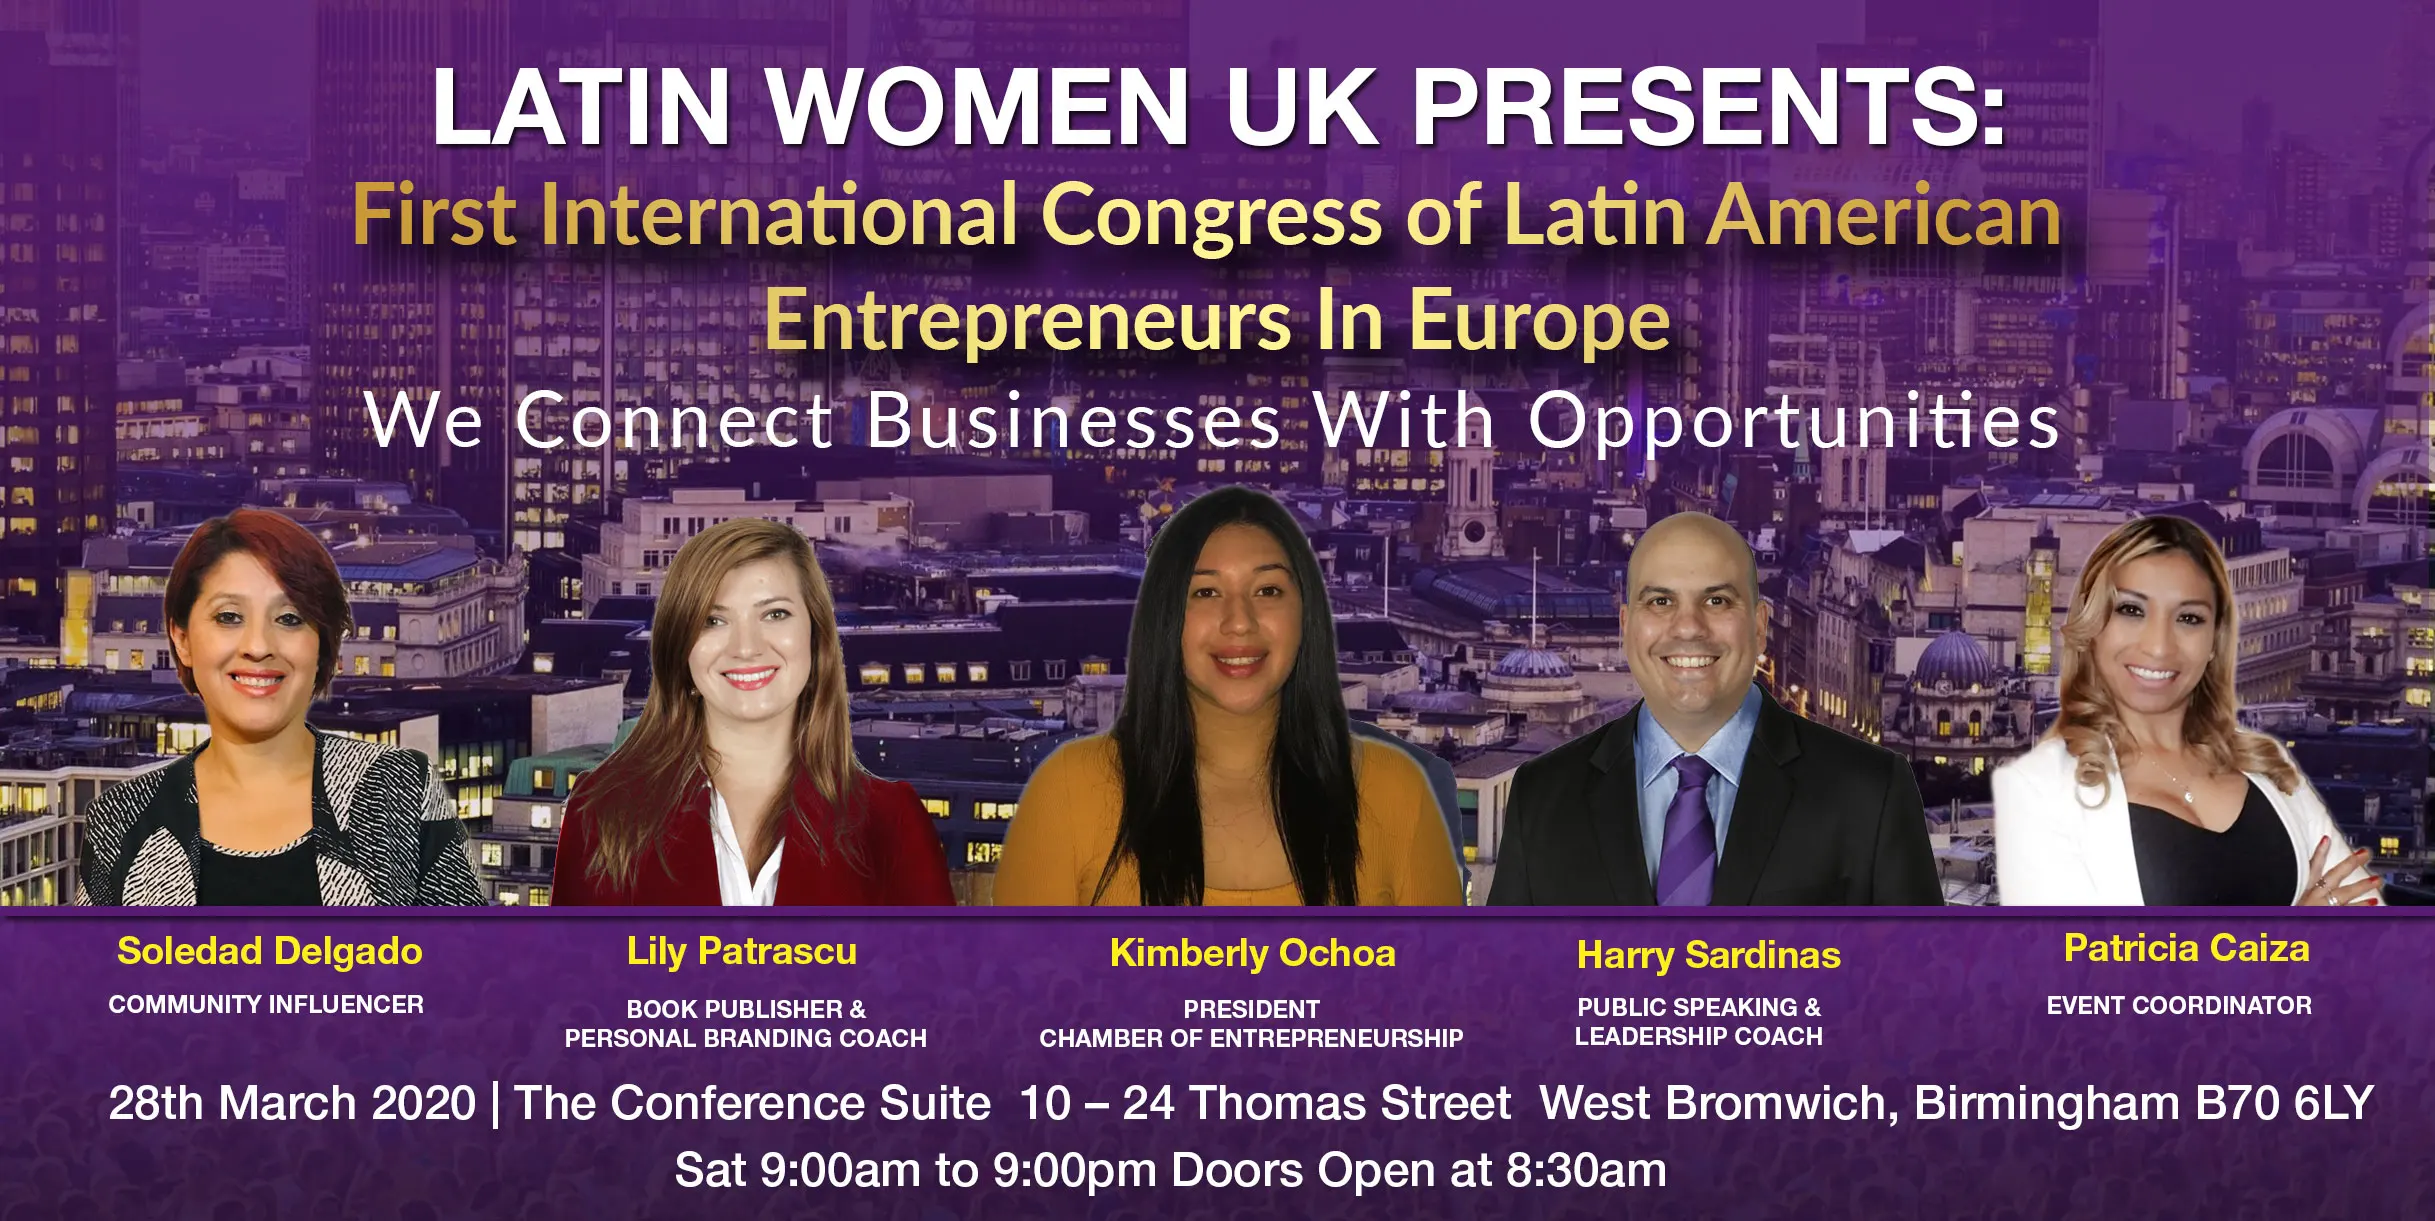 First International Congress of Latin American Entrepreneurs In Europe